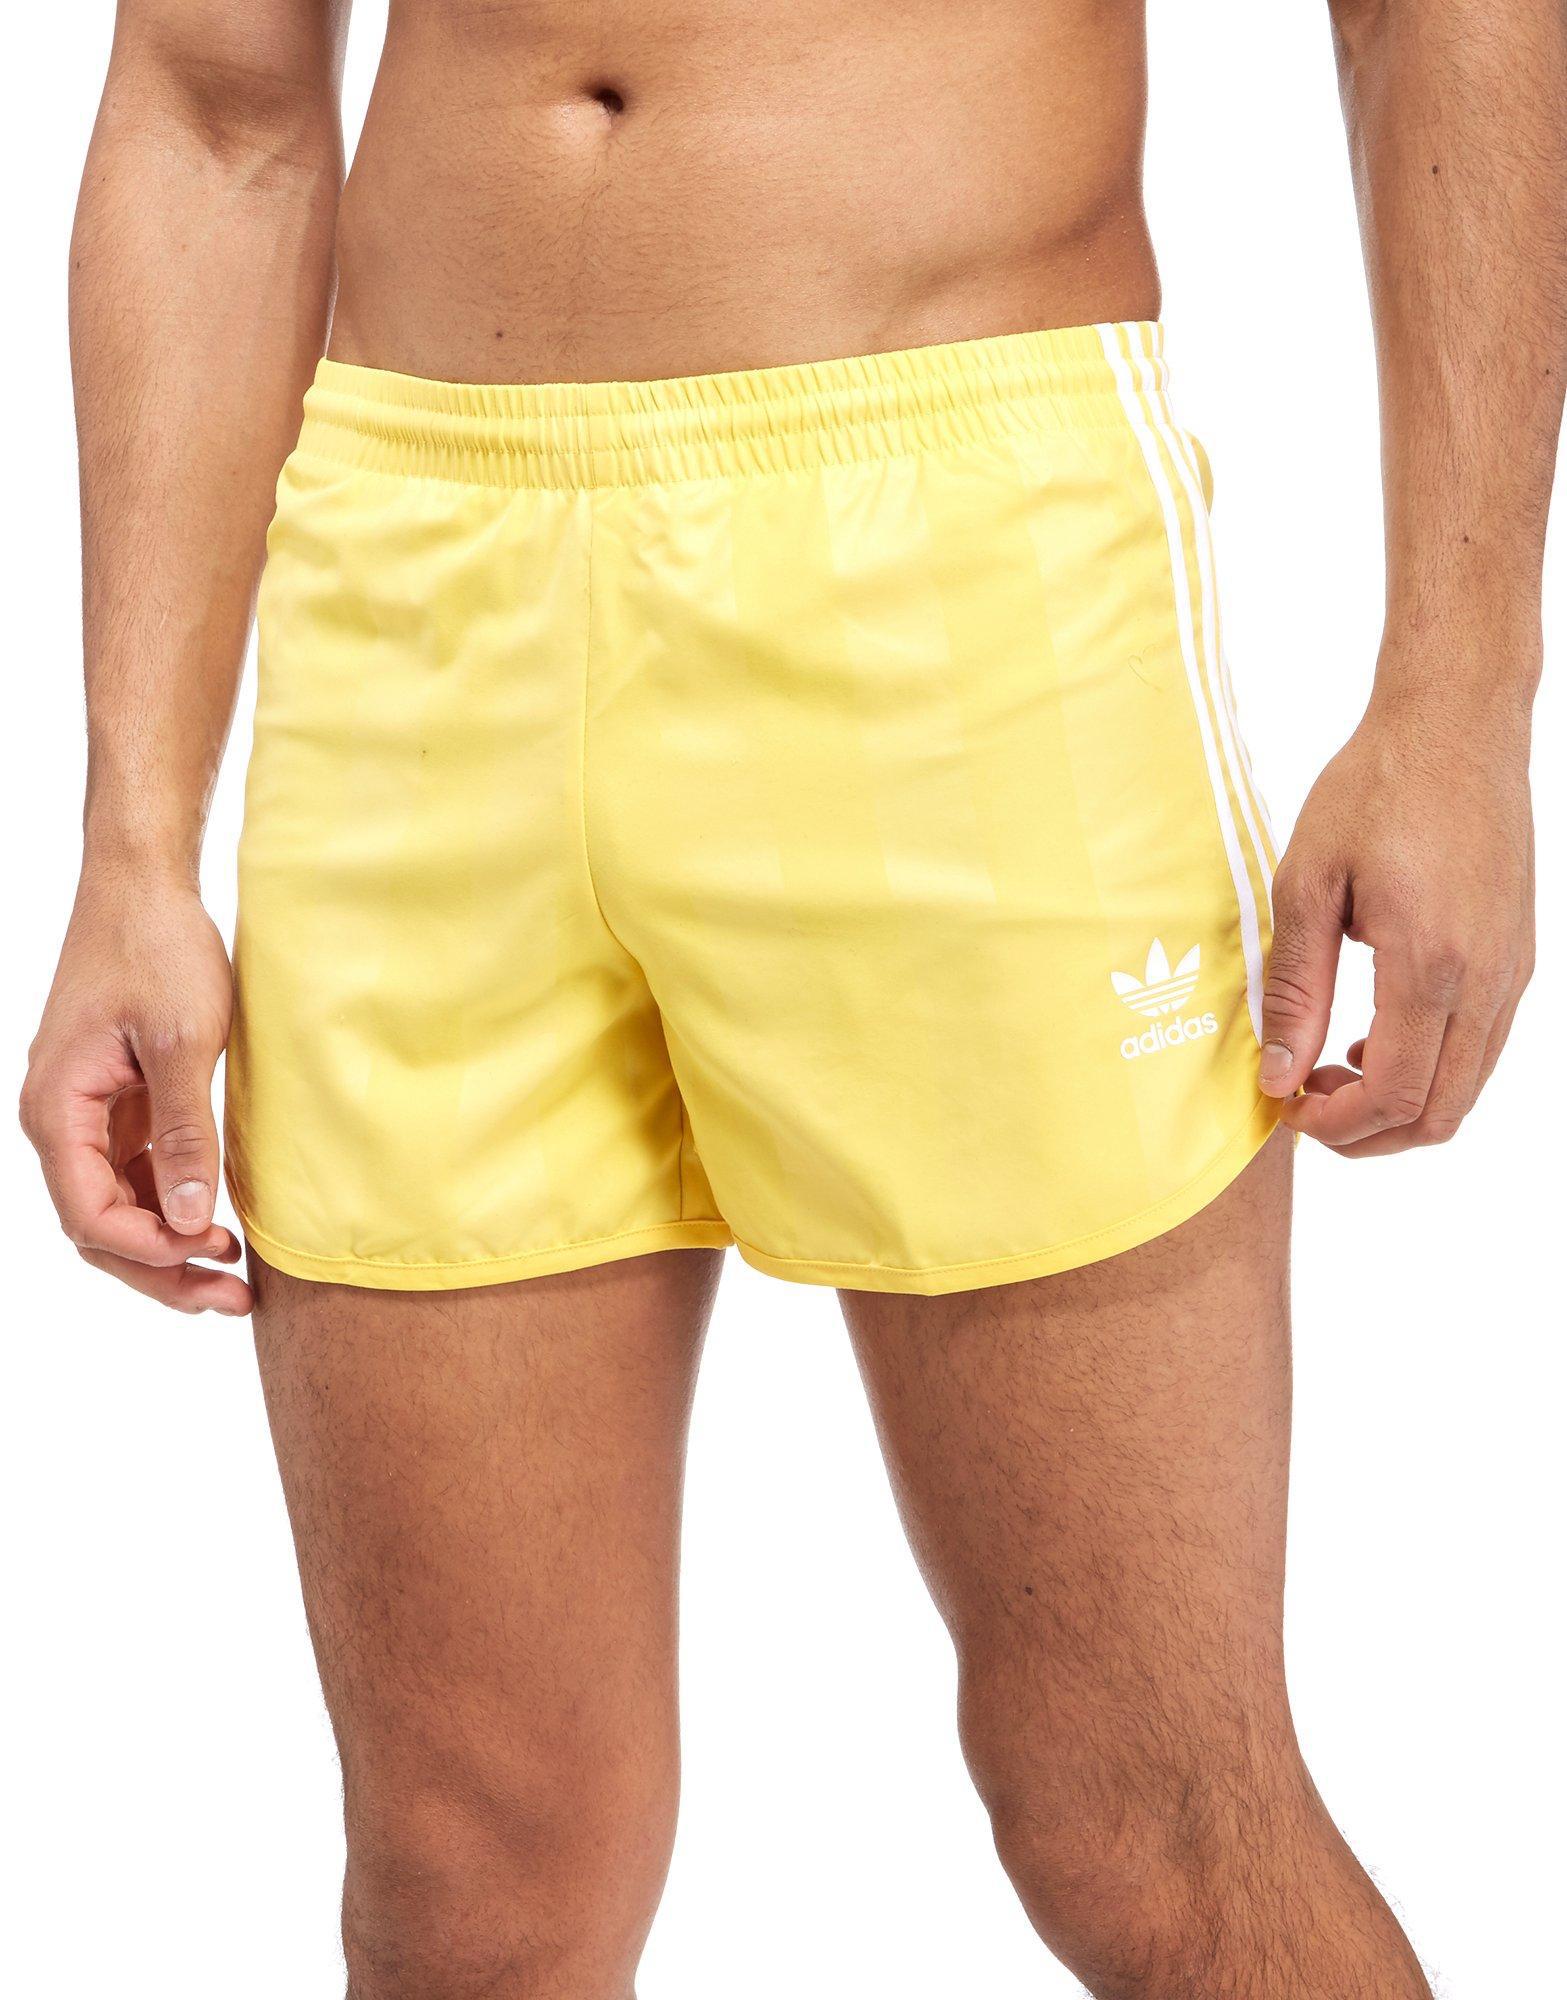 Lyst - Adidas Originals Cali Football Shorts in Yellow for Men